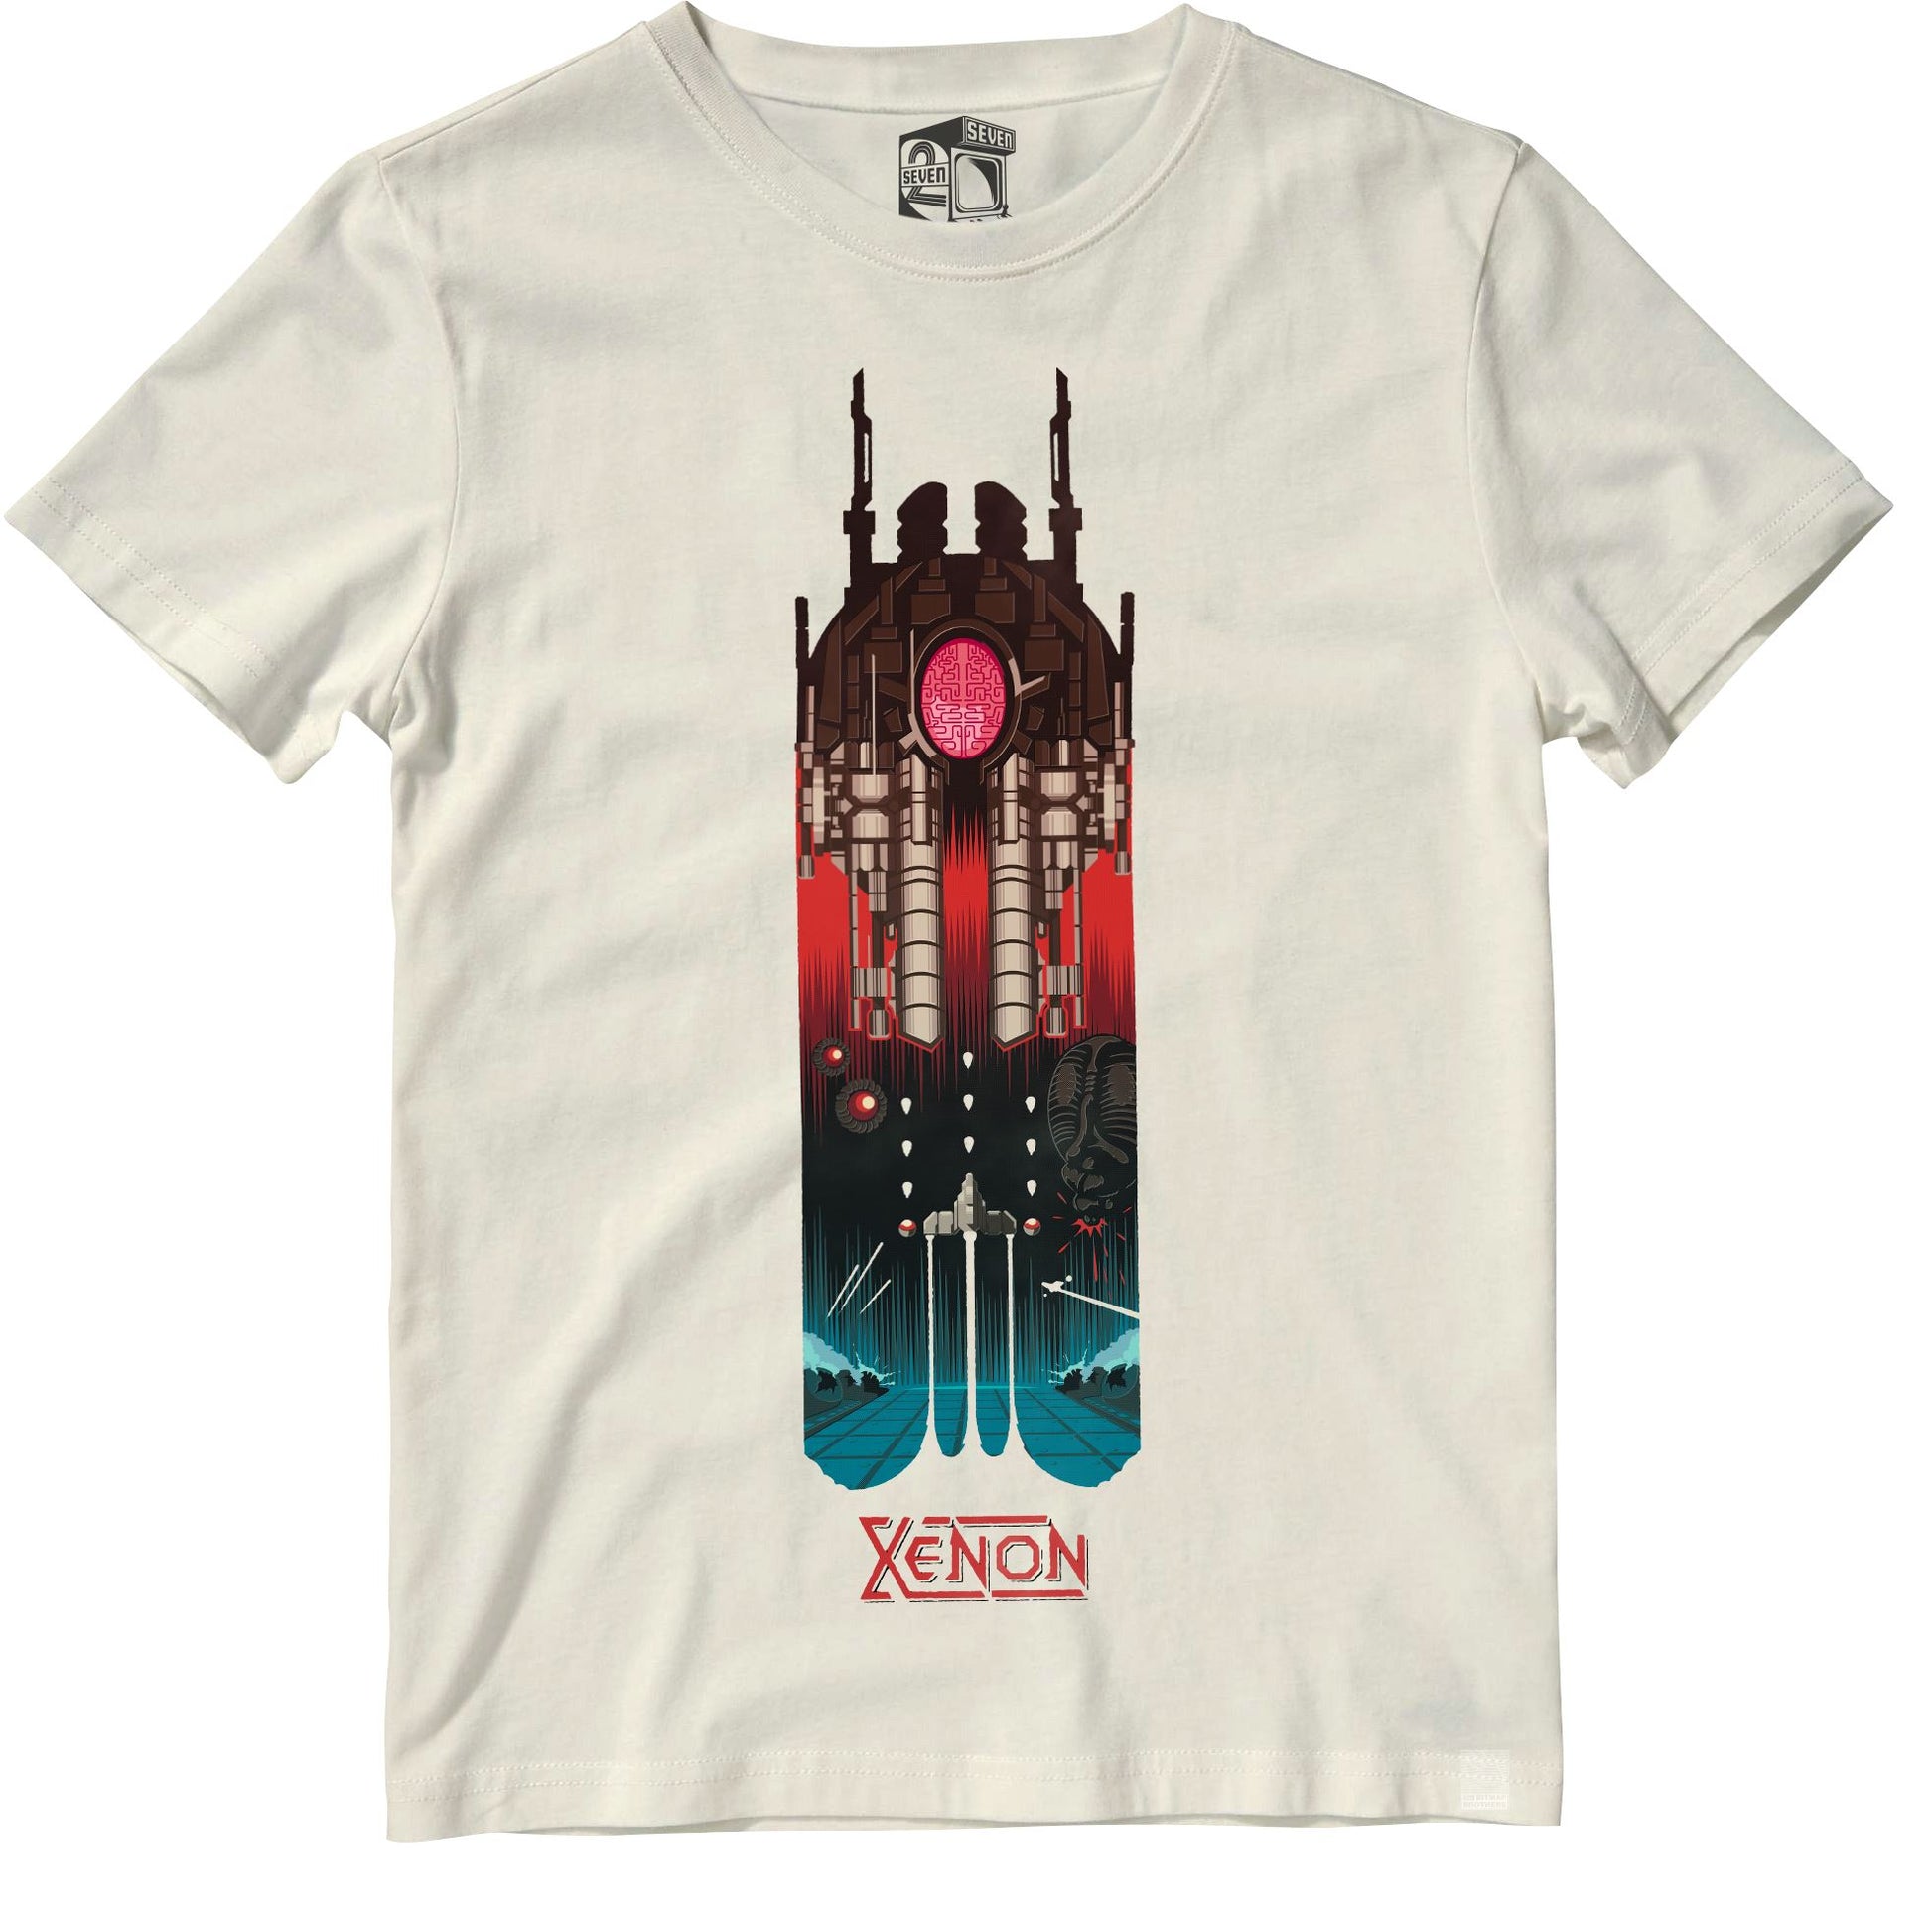 Xenon - Classic Retro Gaming T-Shirt T-Shirt Seven Squared 